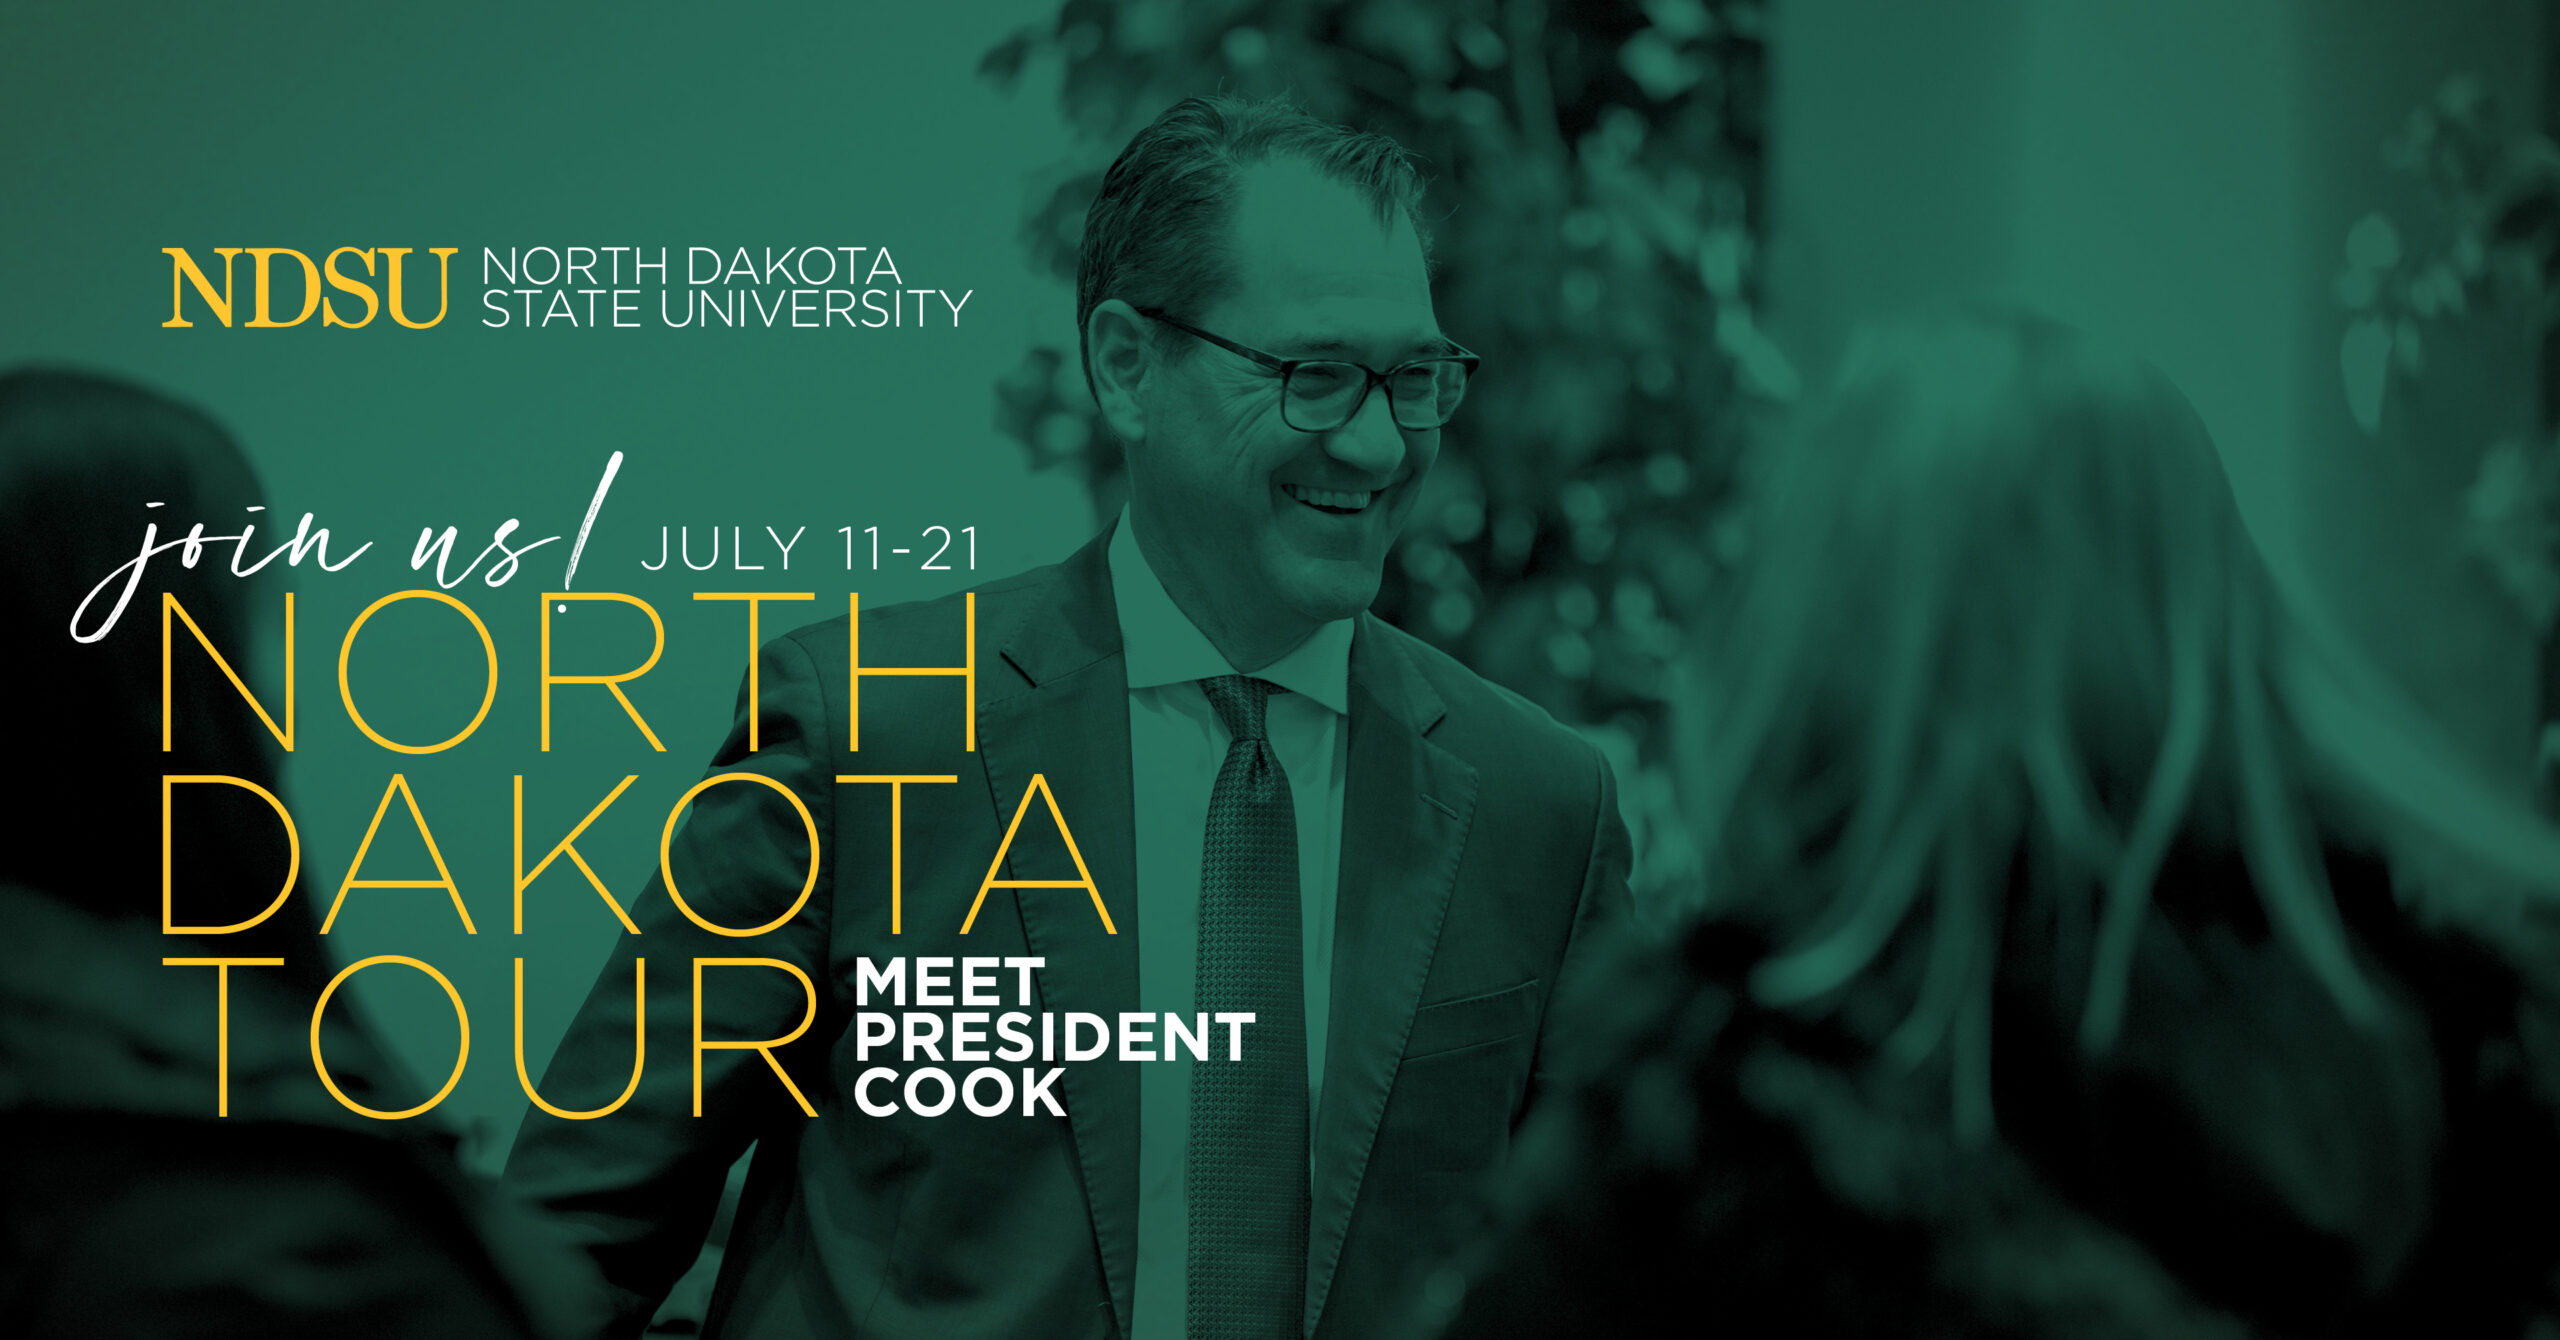 Banner: Join Us! North Dakota Tour | Meet President Cook | July 11-21